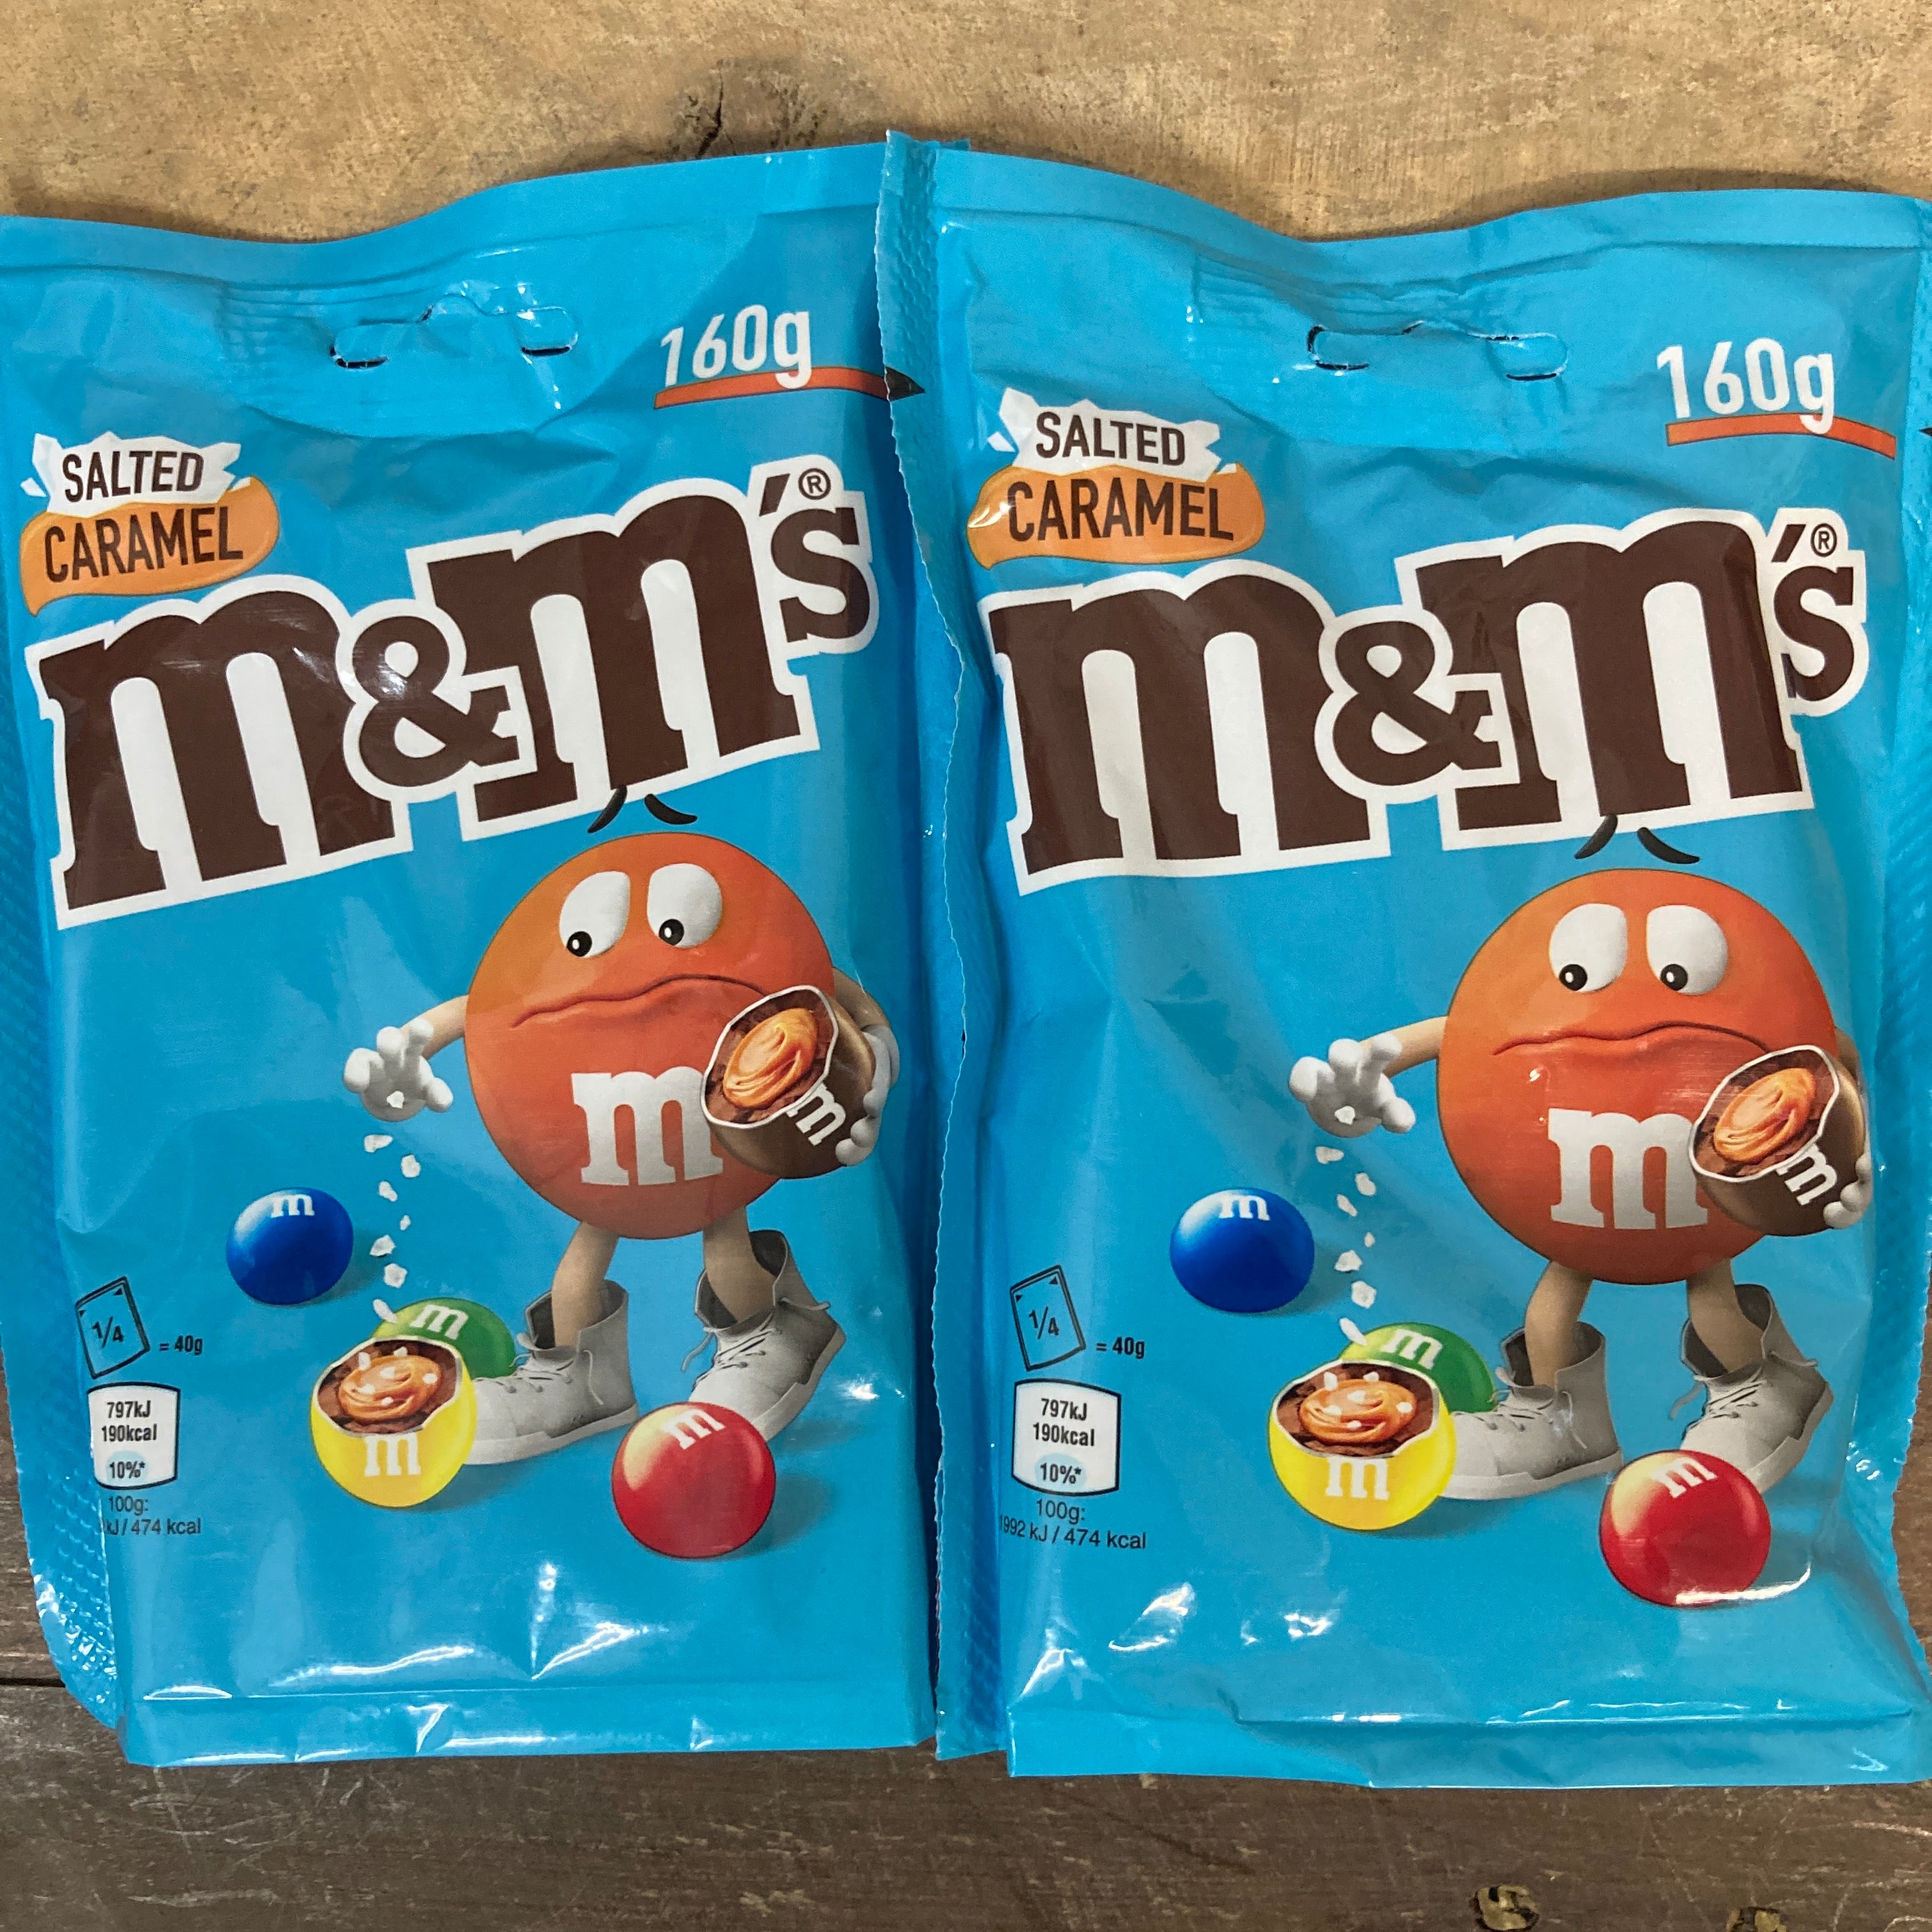 2x M&M's Salted Caramel Milk Chocolate Share Bags (2x160g)